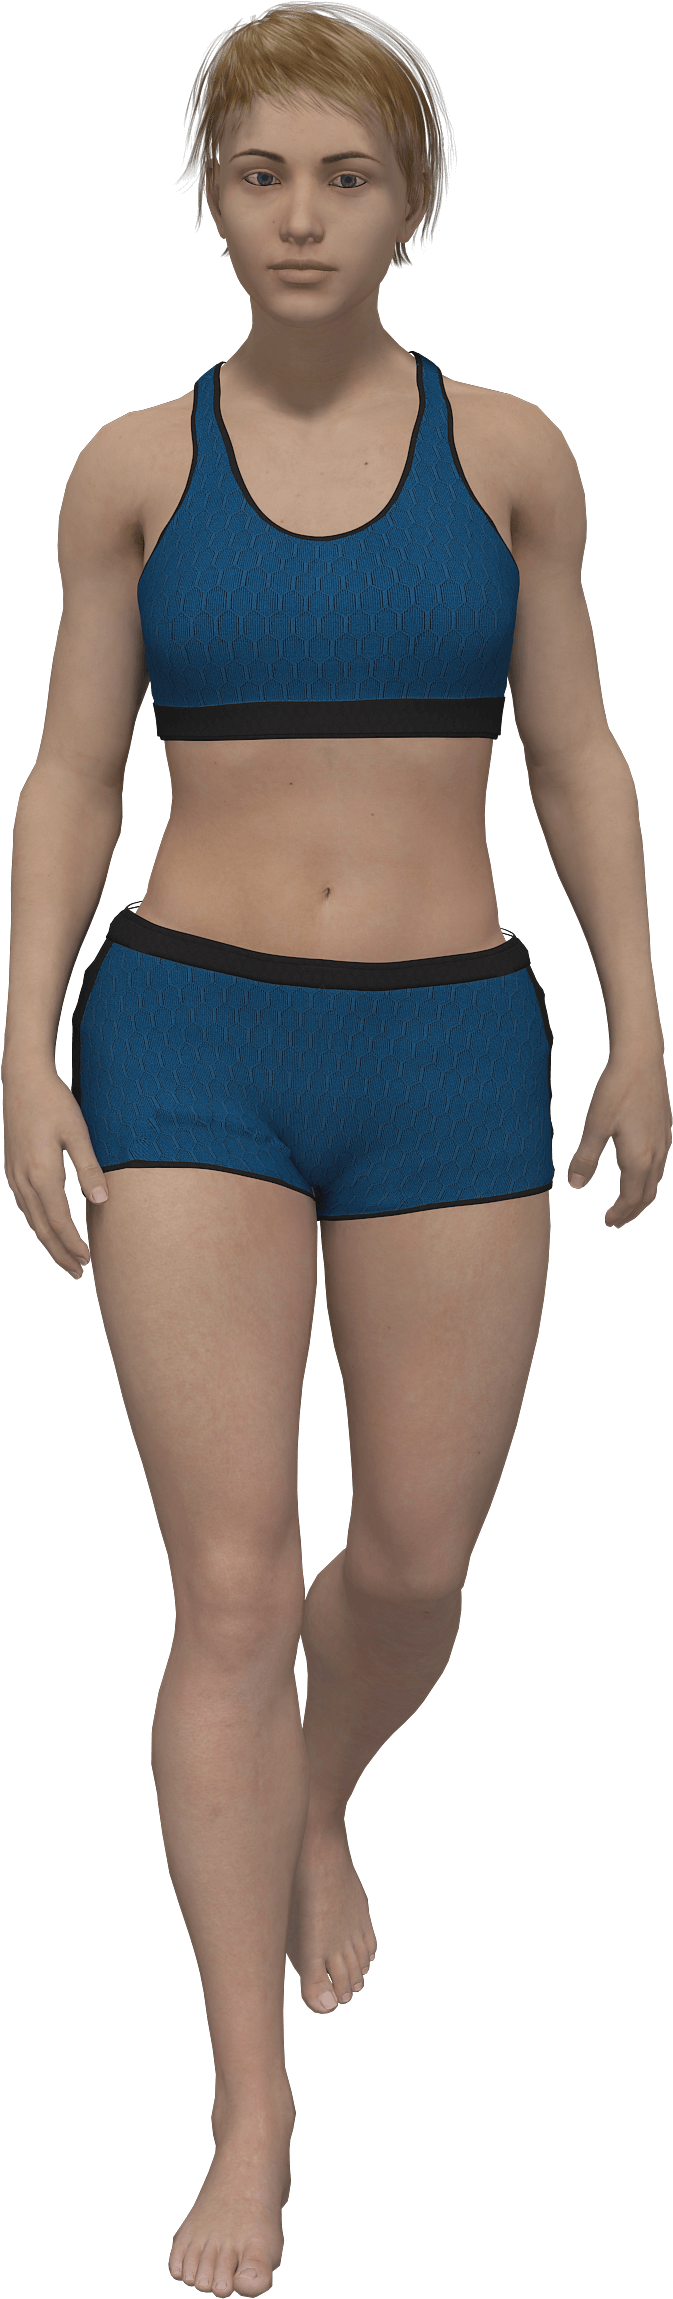 A Woman Wearing Blue Shorts